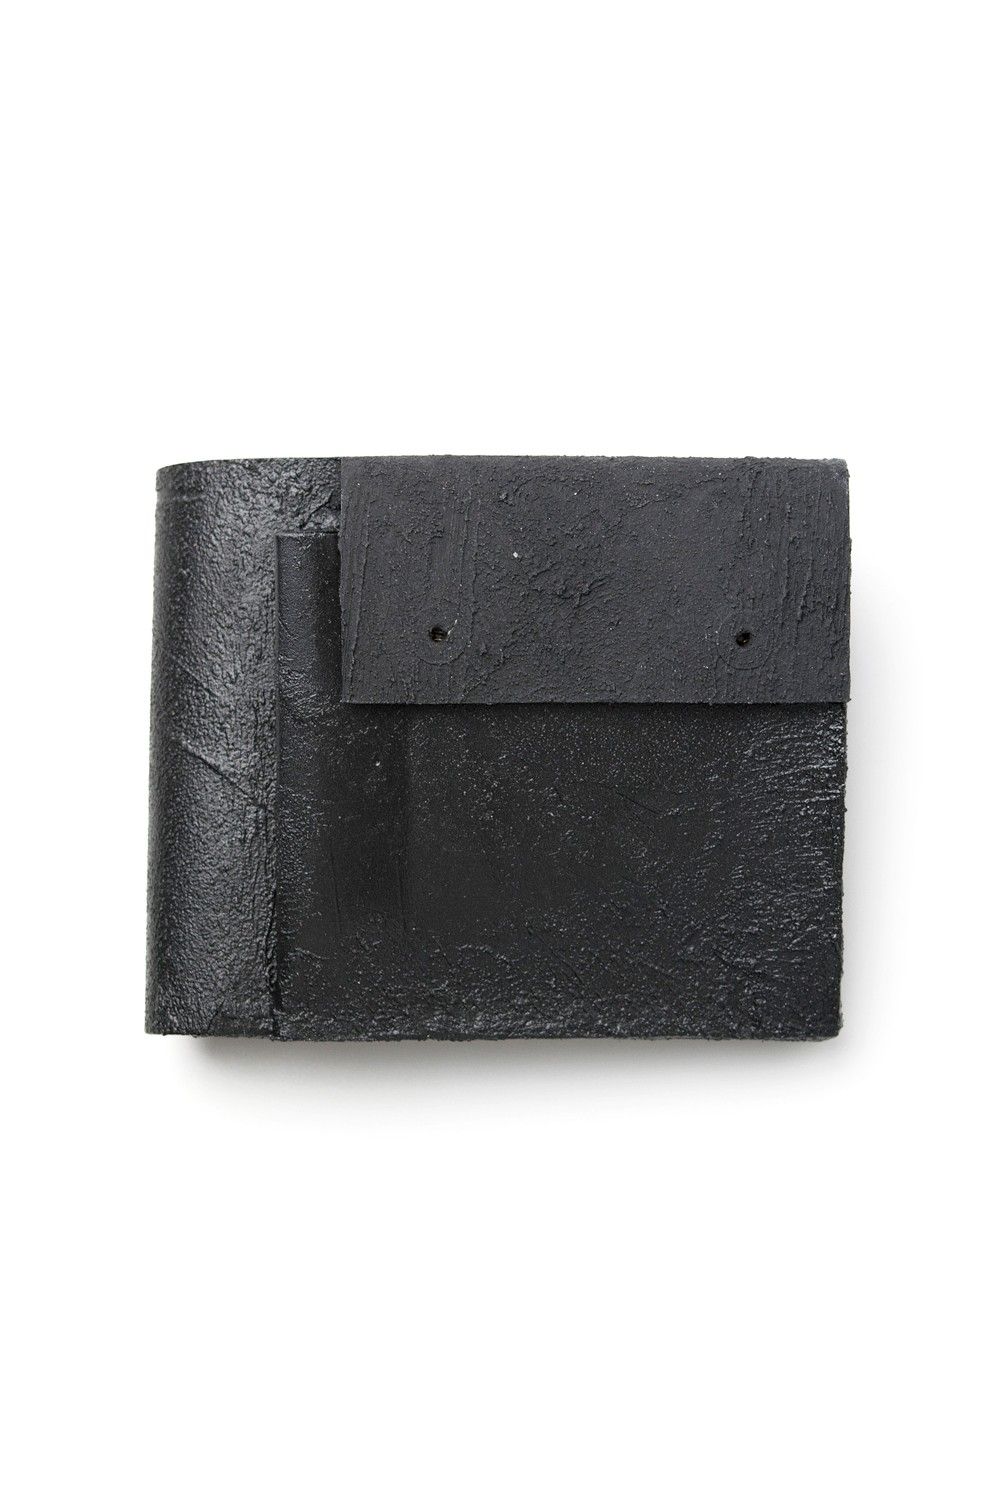 KAGARI YUSUKE - 【ラスト1点】二つ折り財布 [黒い壁] / mw06-bk 